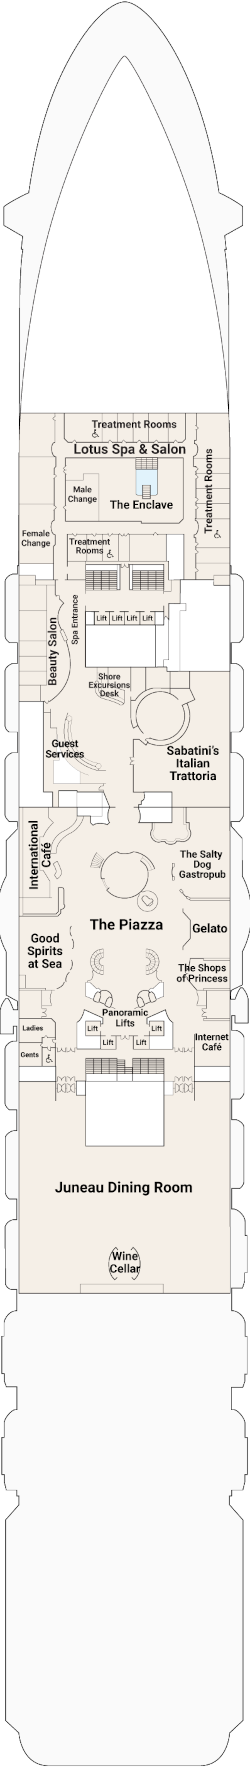 Discovery Princess Plaza Deck Deck Plan